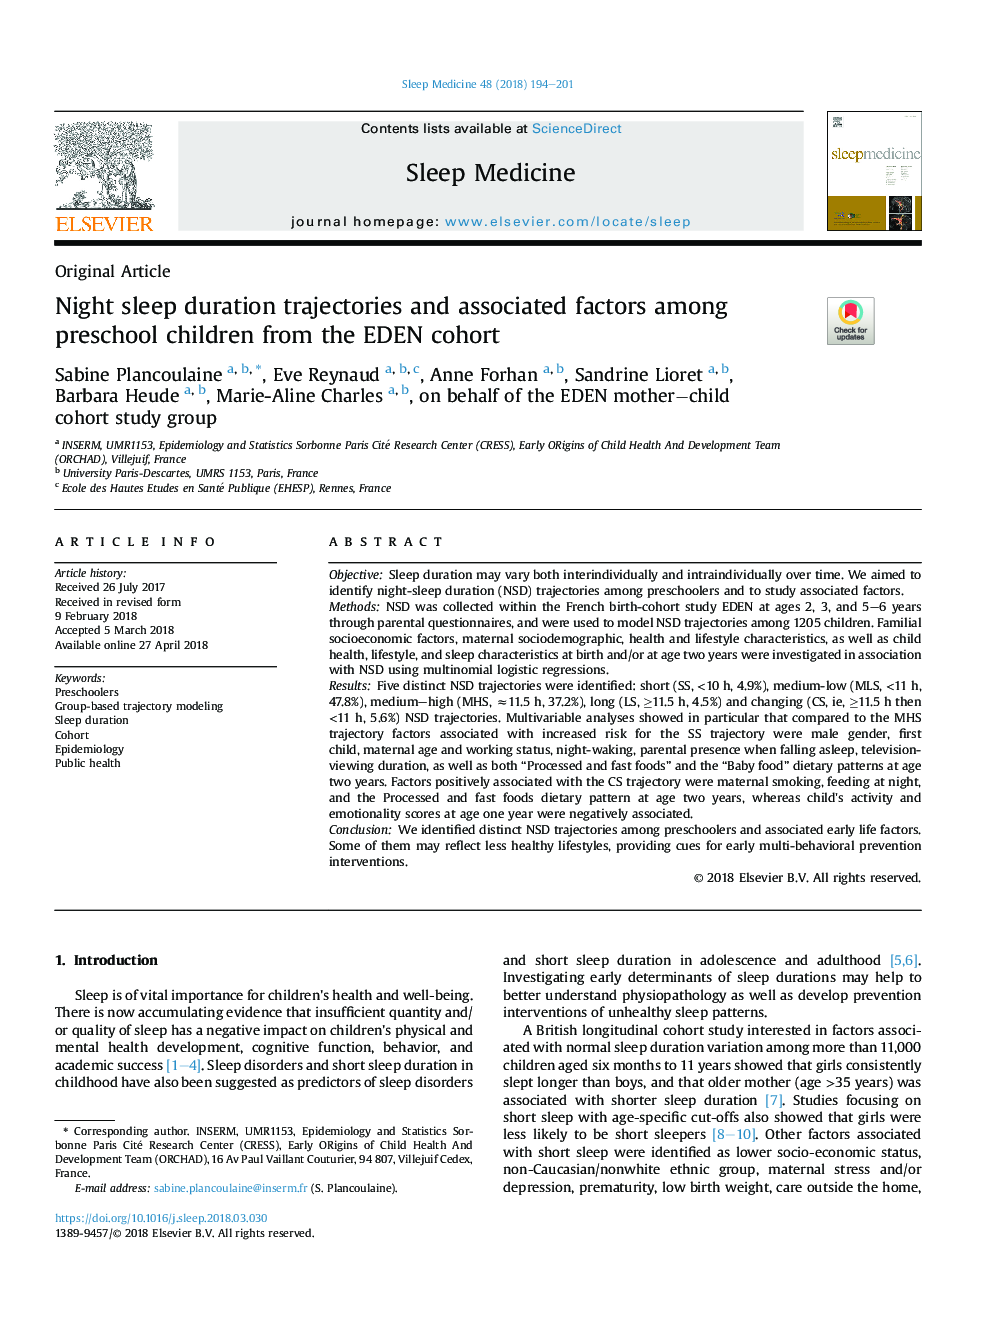 Night sleep duration trajectories and associated factors among preschool children from the EDEN cohort